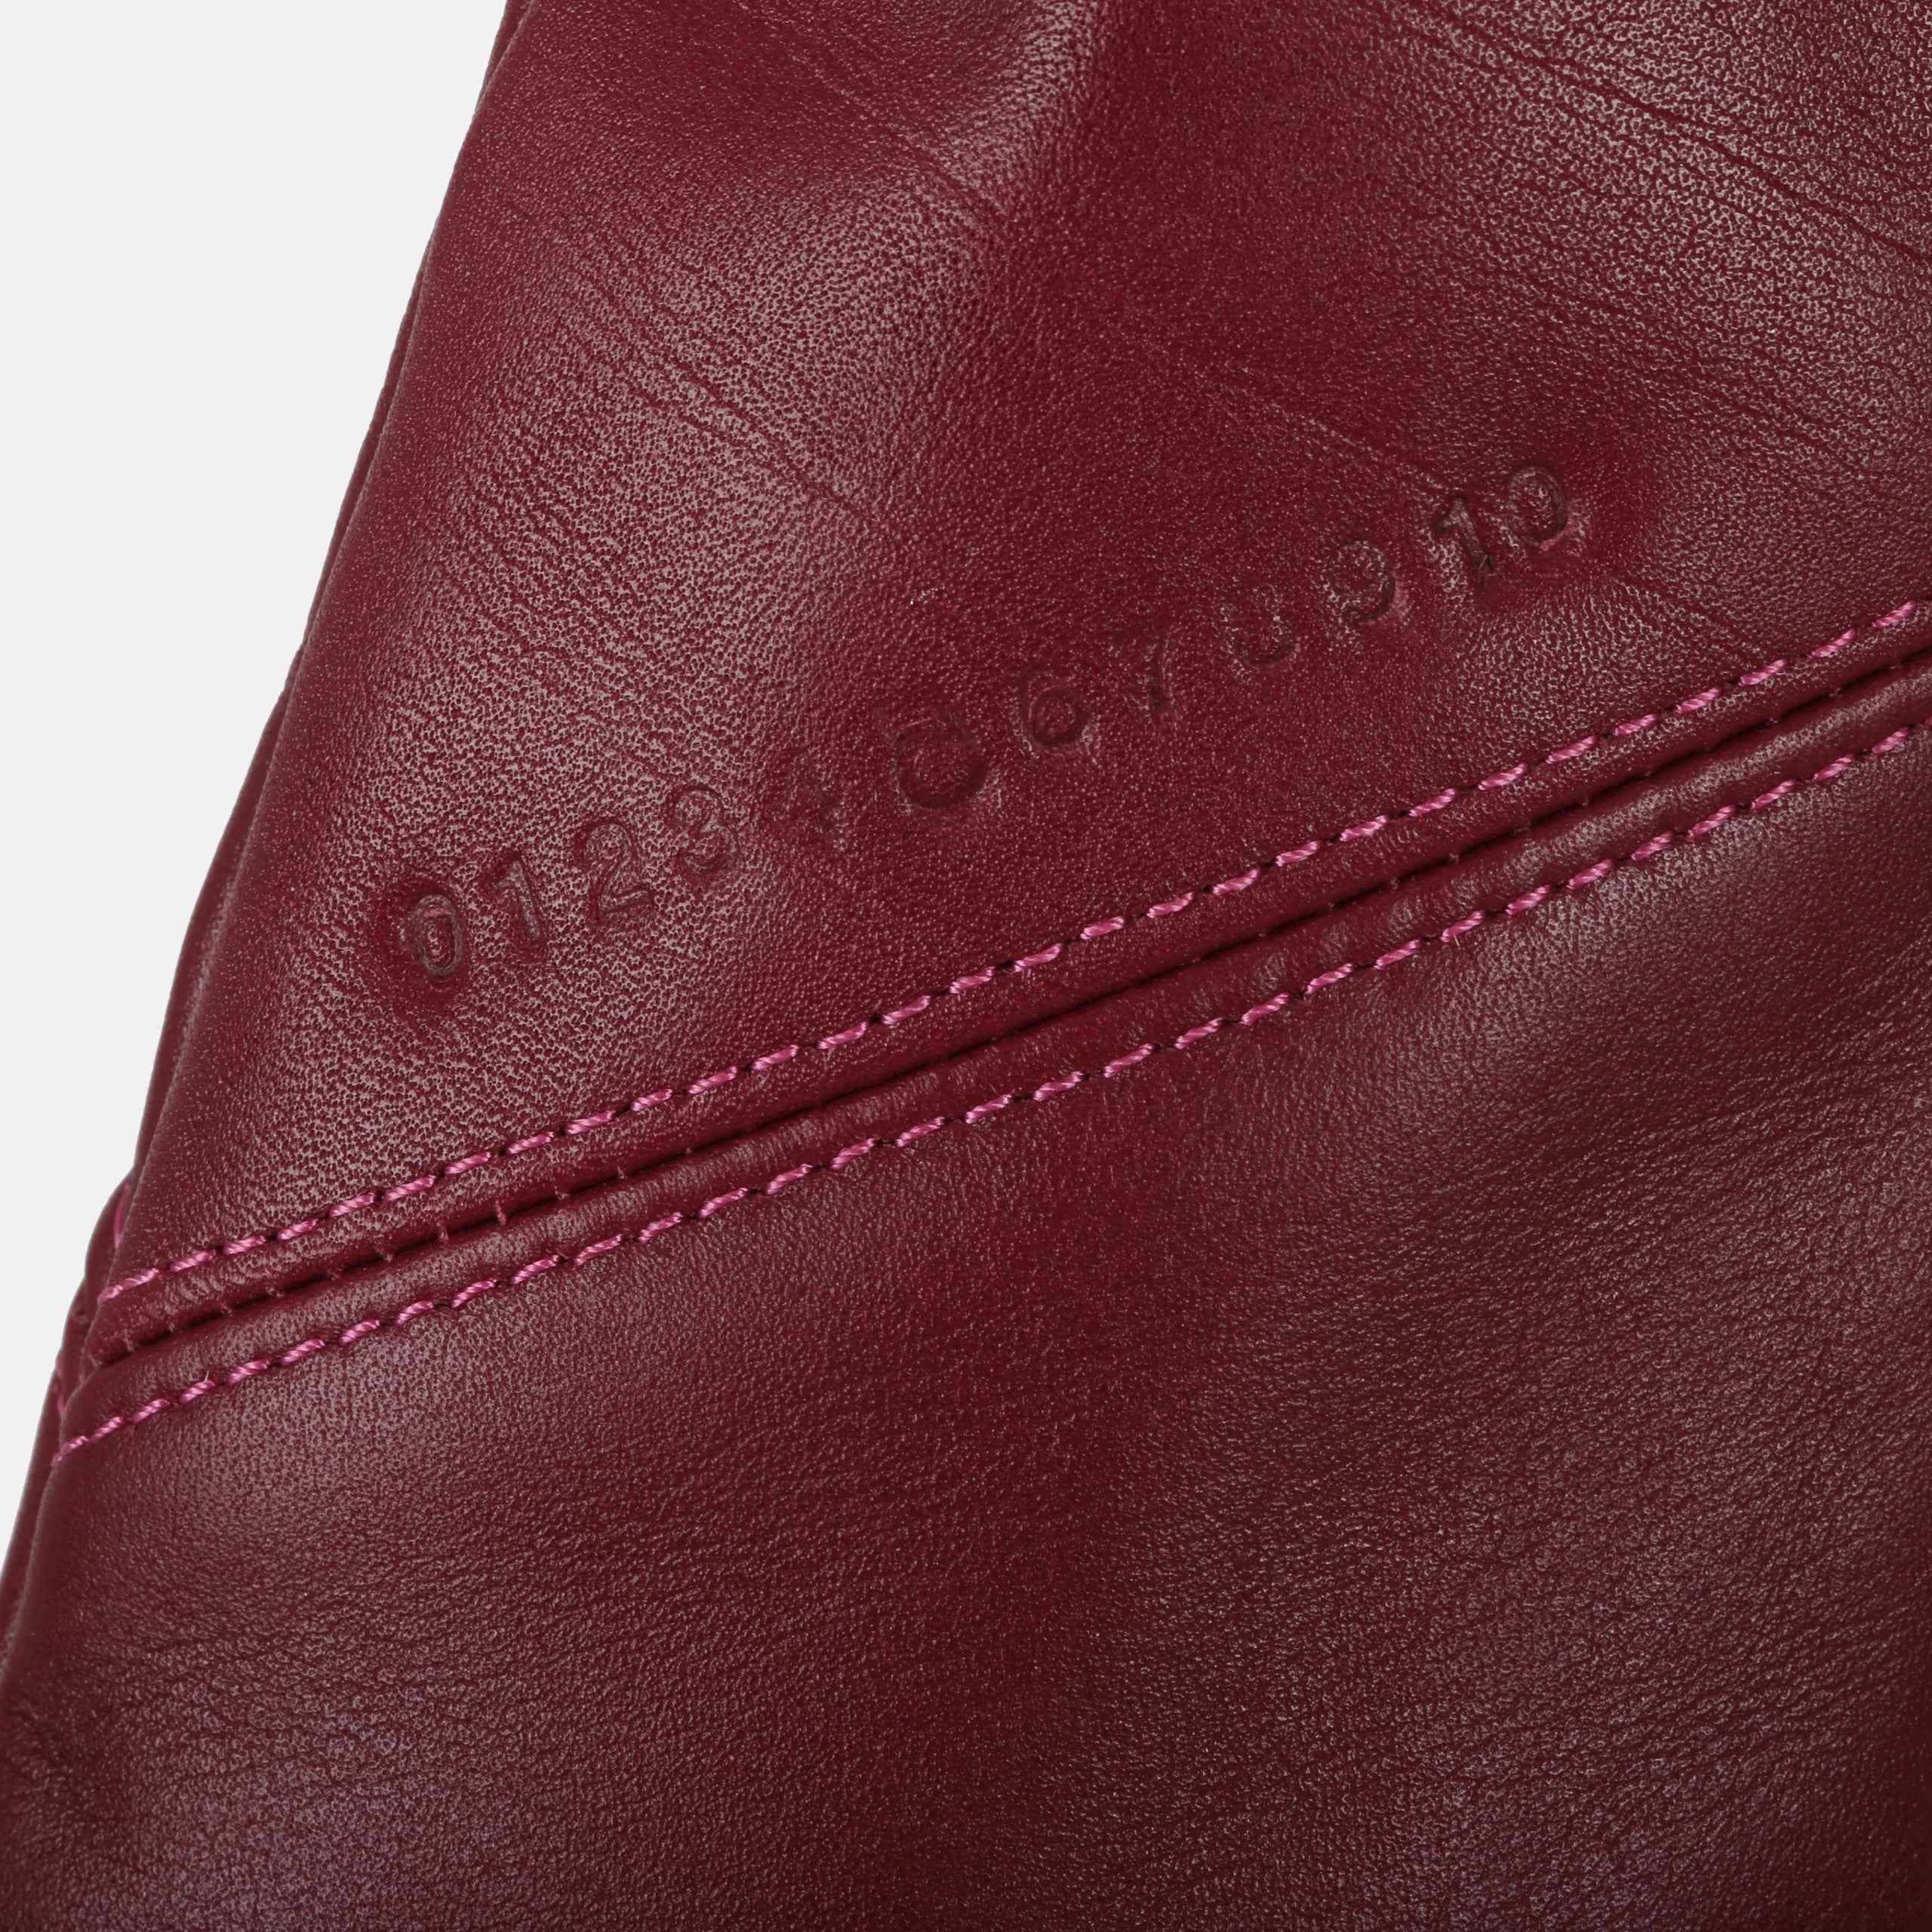 Red RAINDROP handbag (real leather)